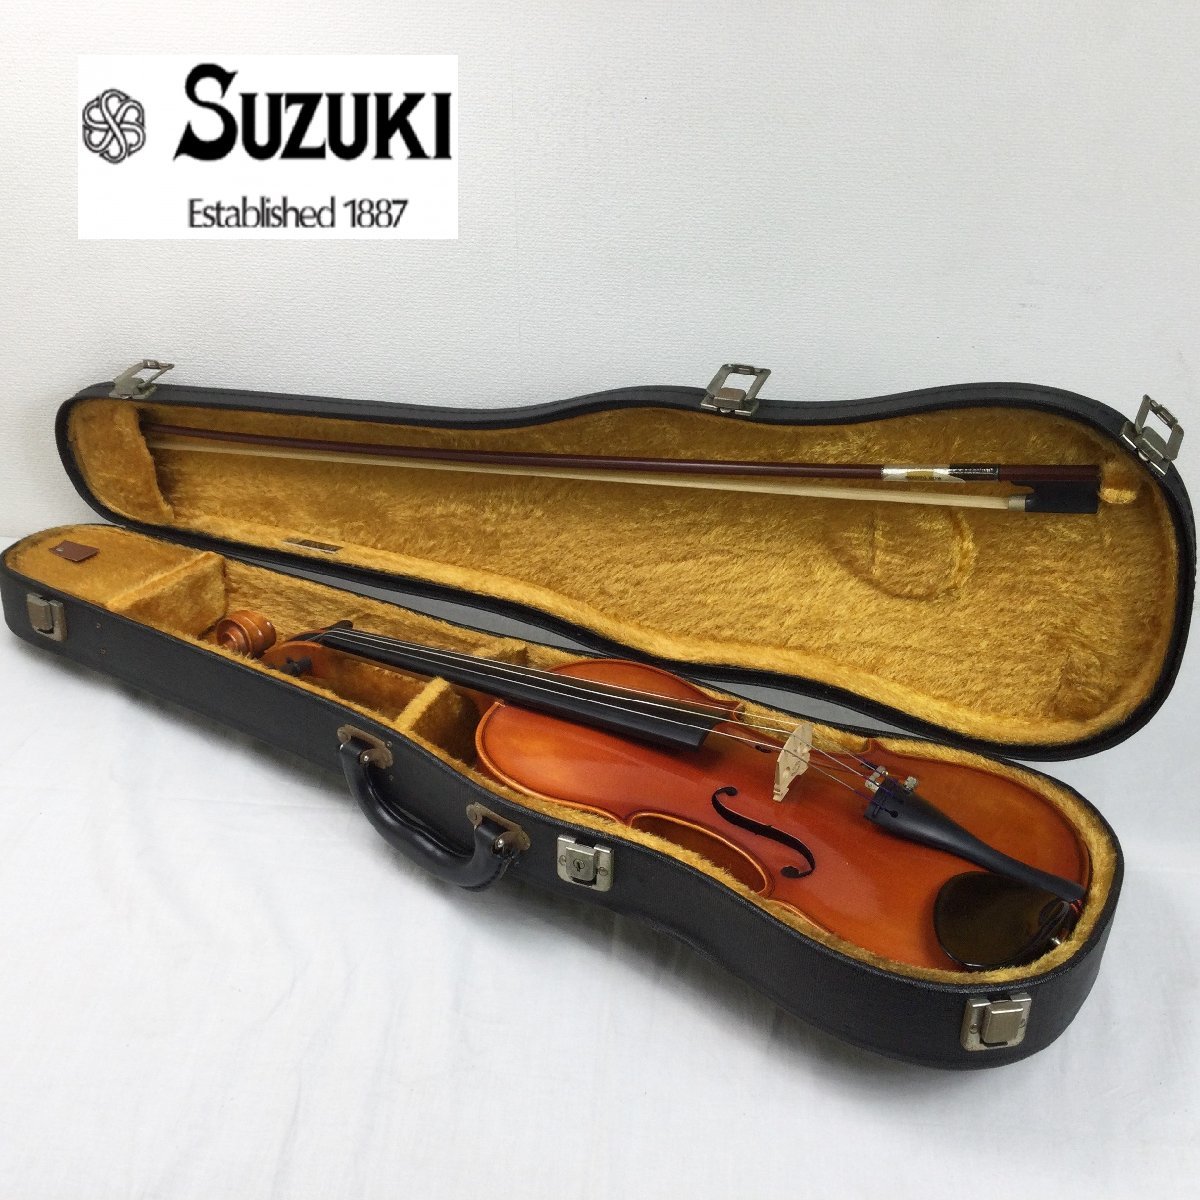 SUZUKI VIOLIN 1980年製 1/2 スズキ バイオリン No.280 ハードケース付 